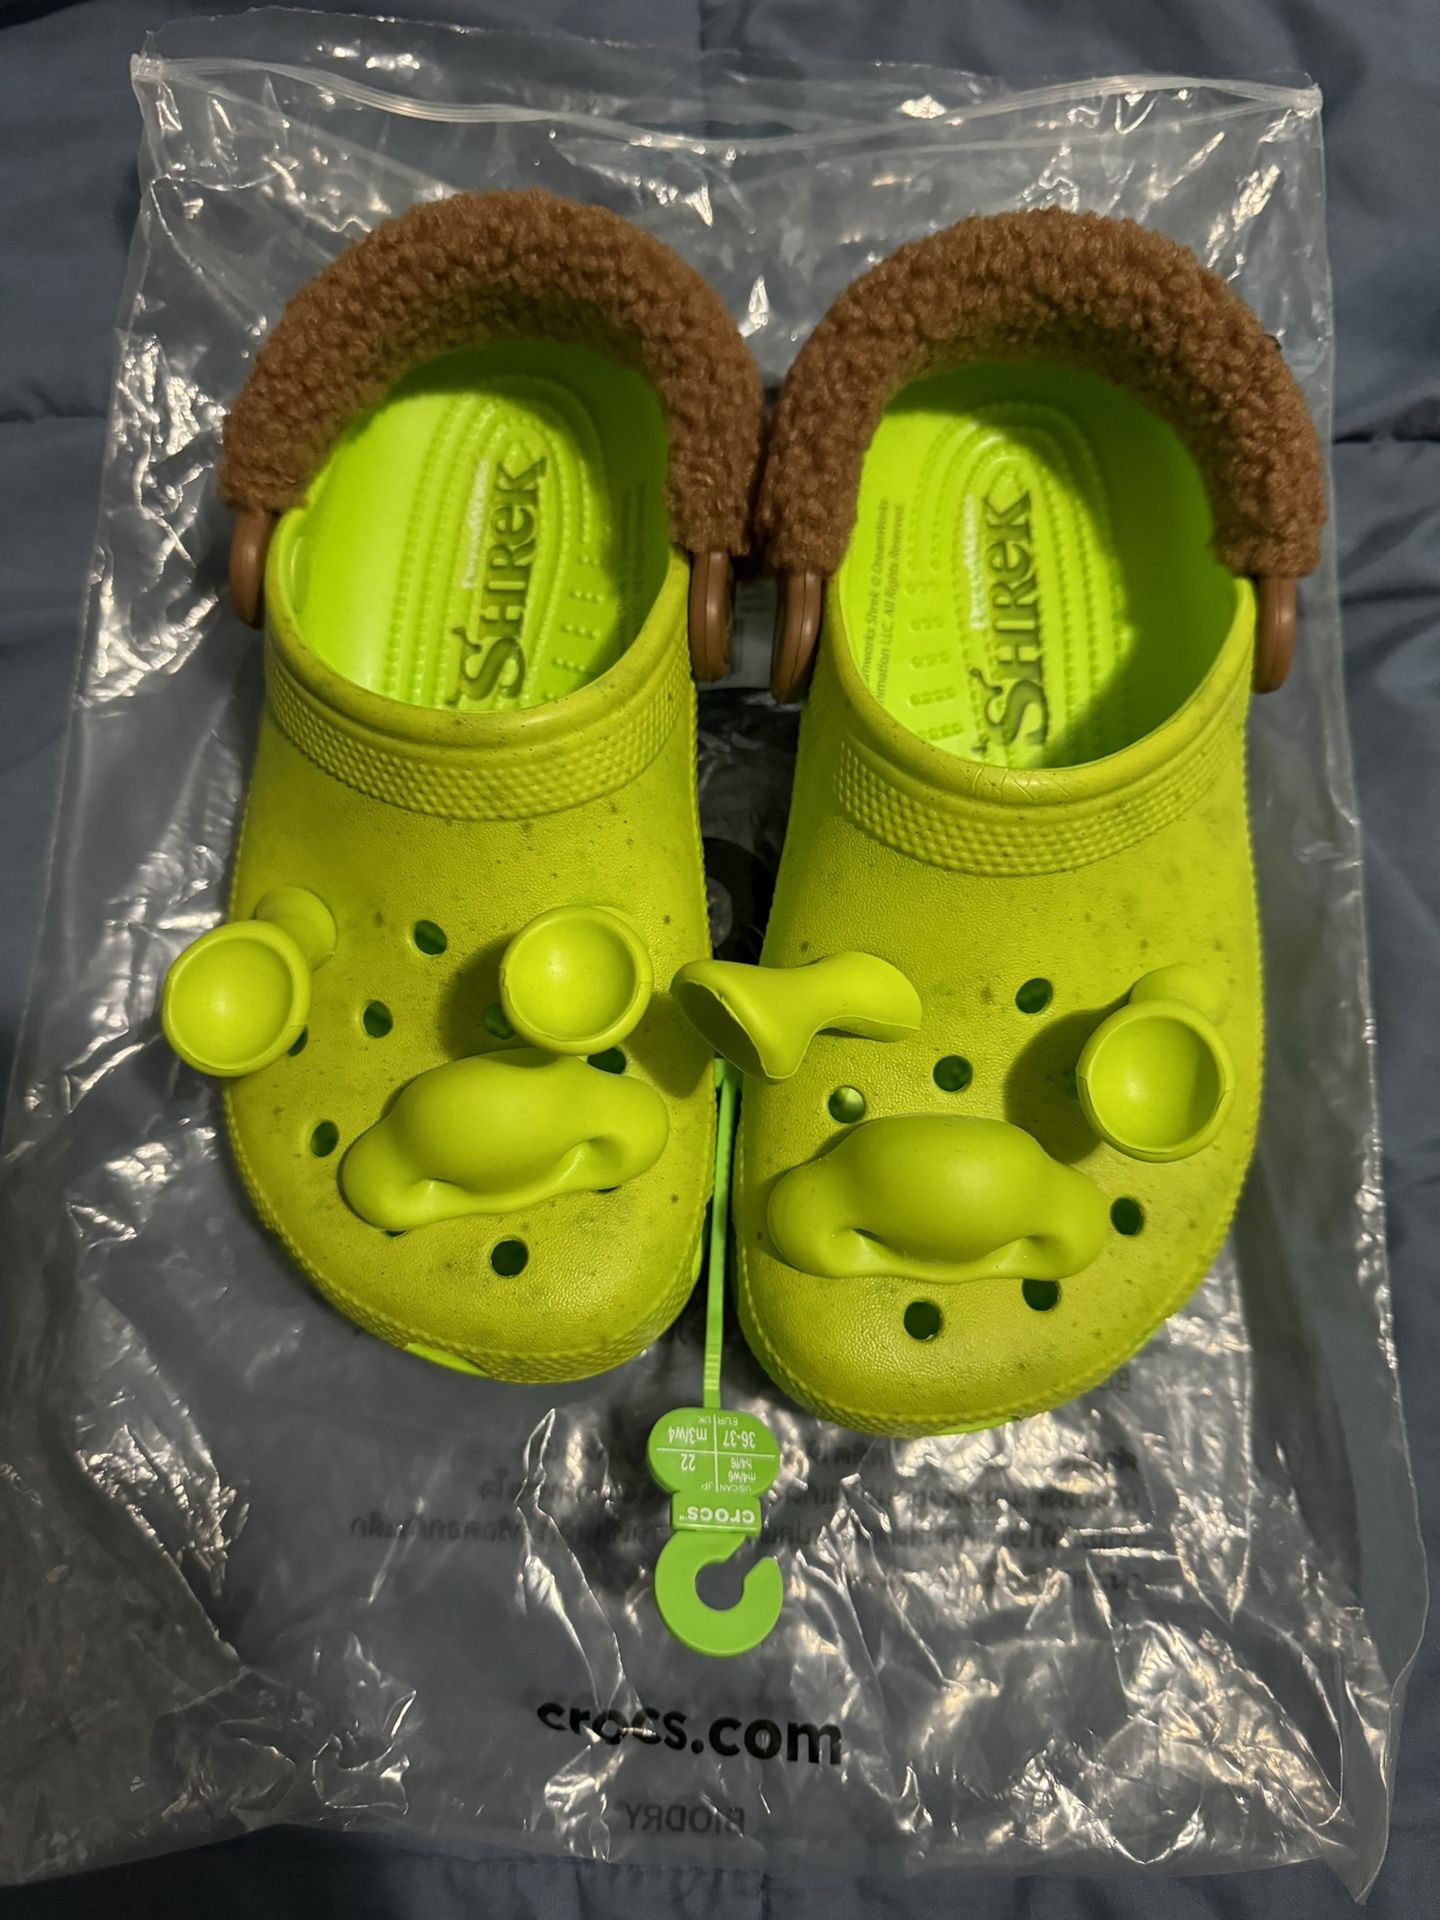 Crocs Shrek Brand New Size 4mens 6womens